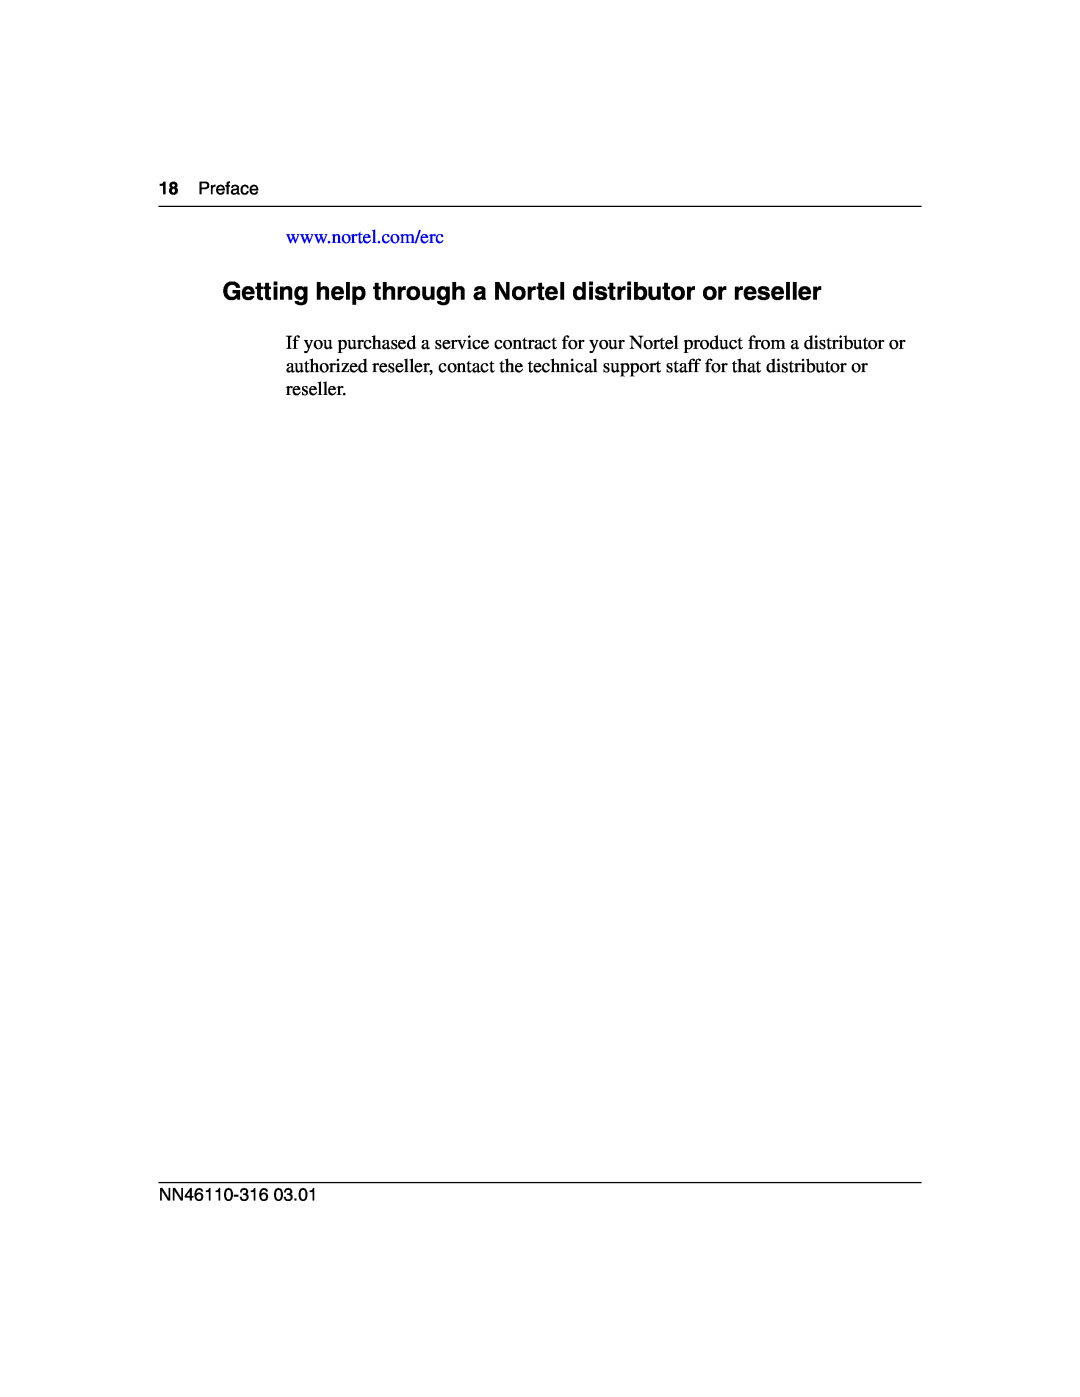 Nortel Networks 1750 manual Getting help through a Nortel distributor or reseller, Preface, NN46110-316 